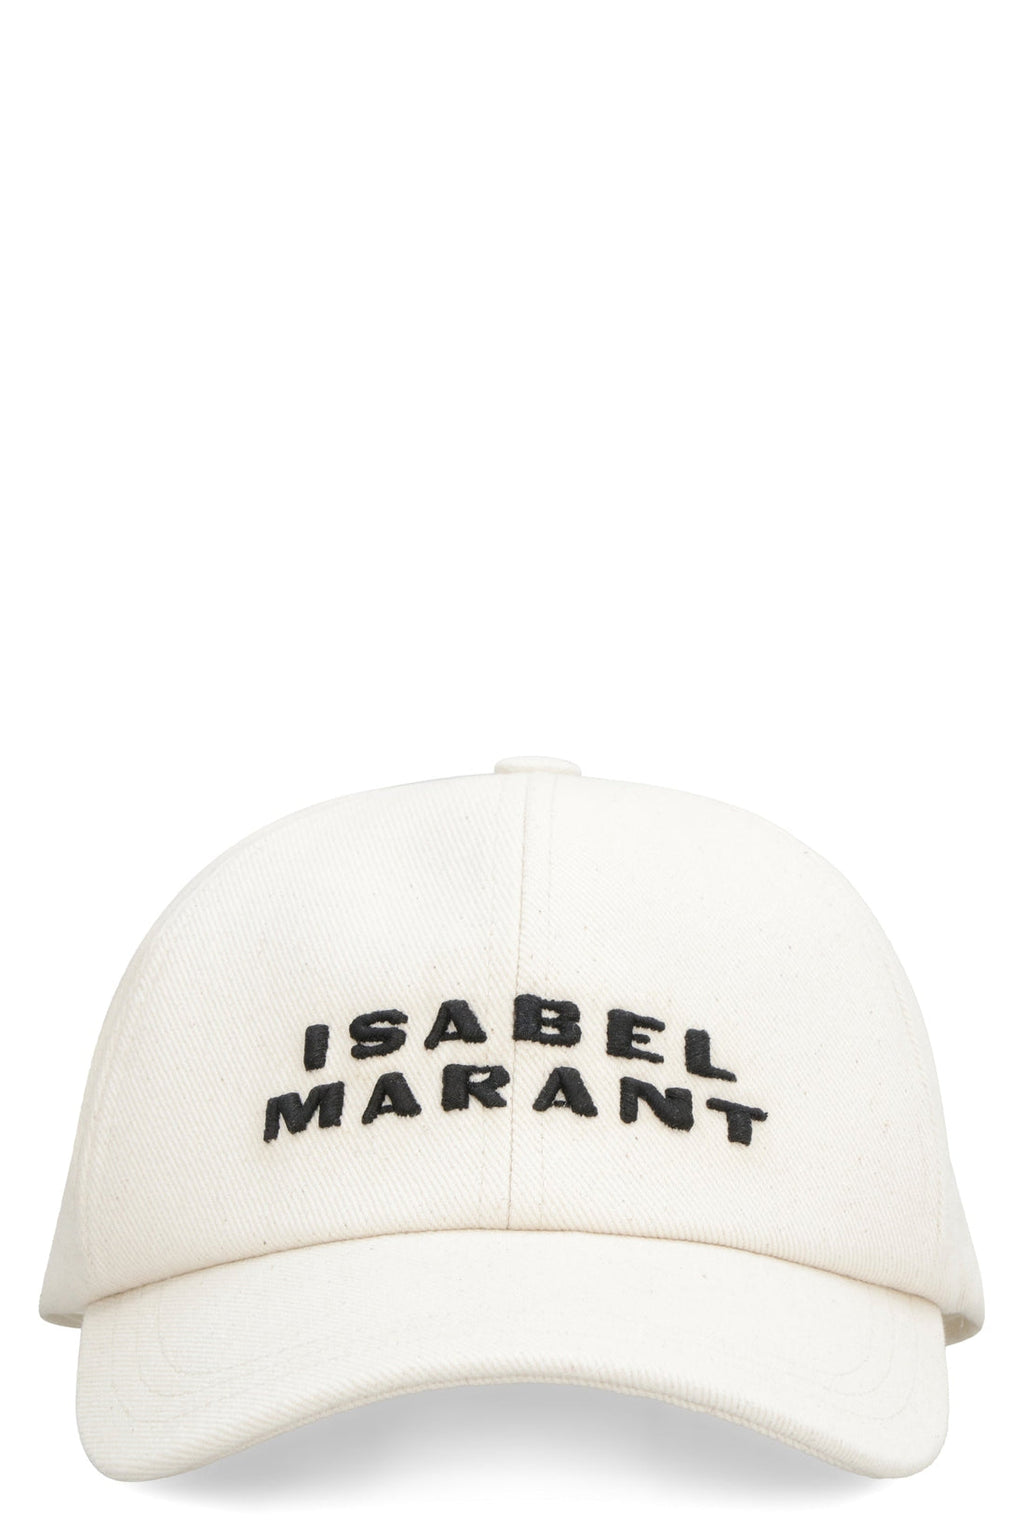 Isabel Marant-OUTLET-SALE-Logo baseball cap-ARCHIVIST